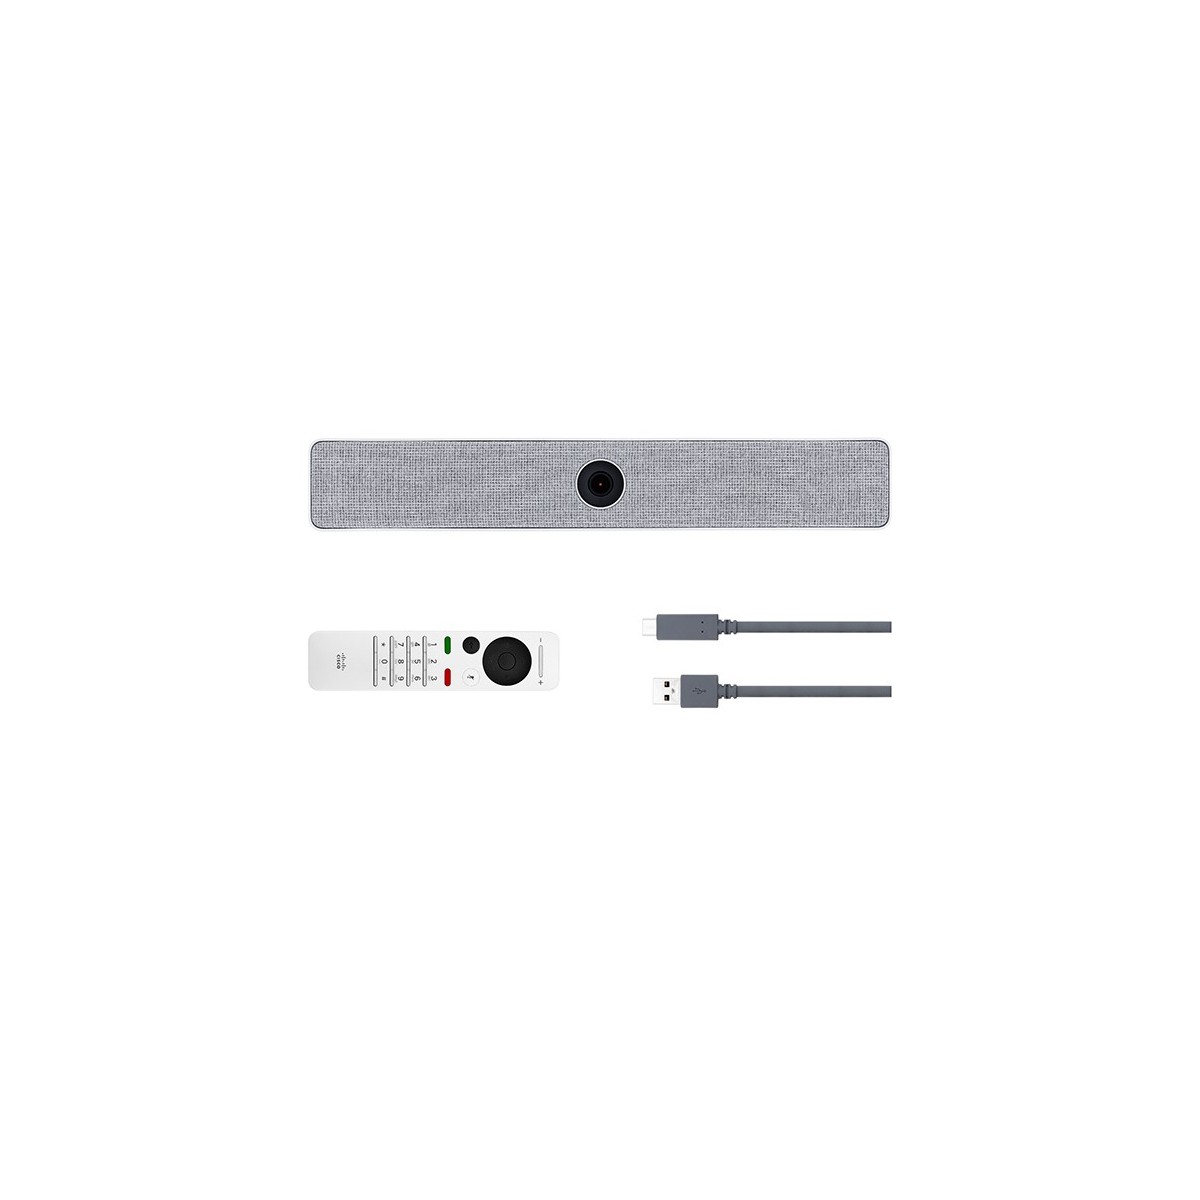 Cisco Room USB - With Remote - 8 MP - CMOS - 25.4 / 1.4 mm (1 / 1.4") - 2x - 120° - 1 m